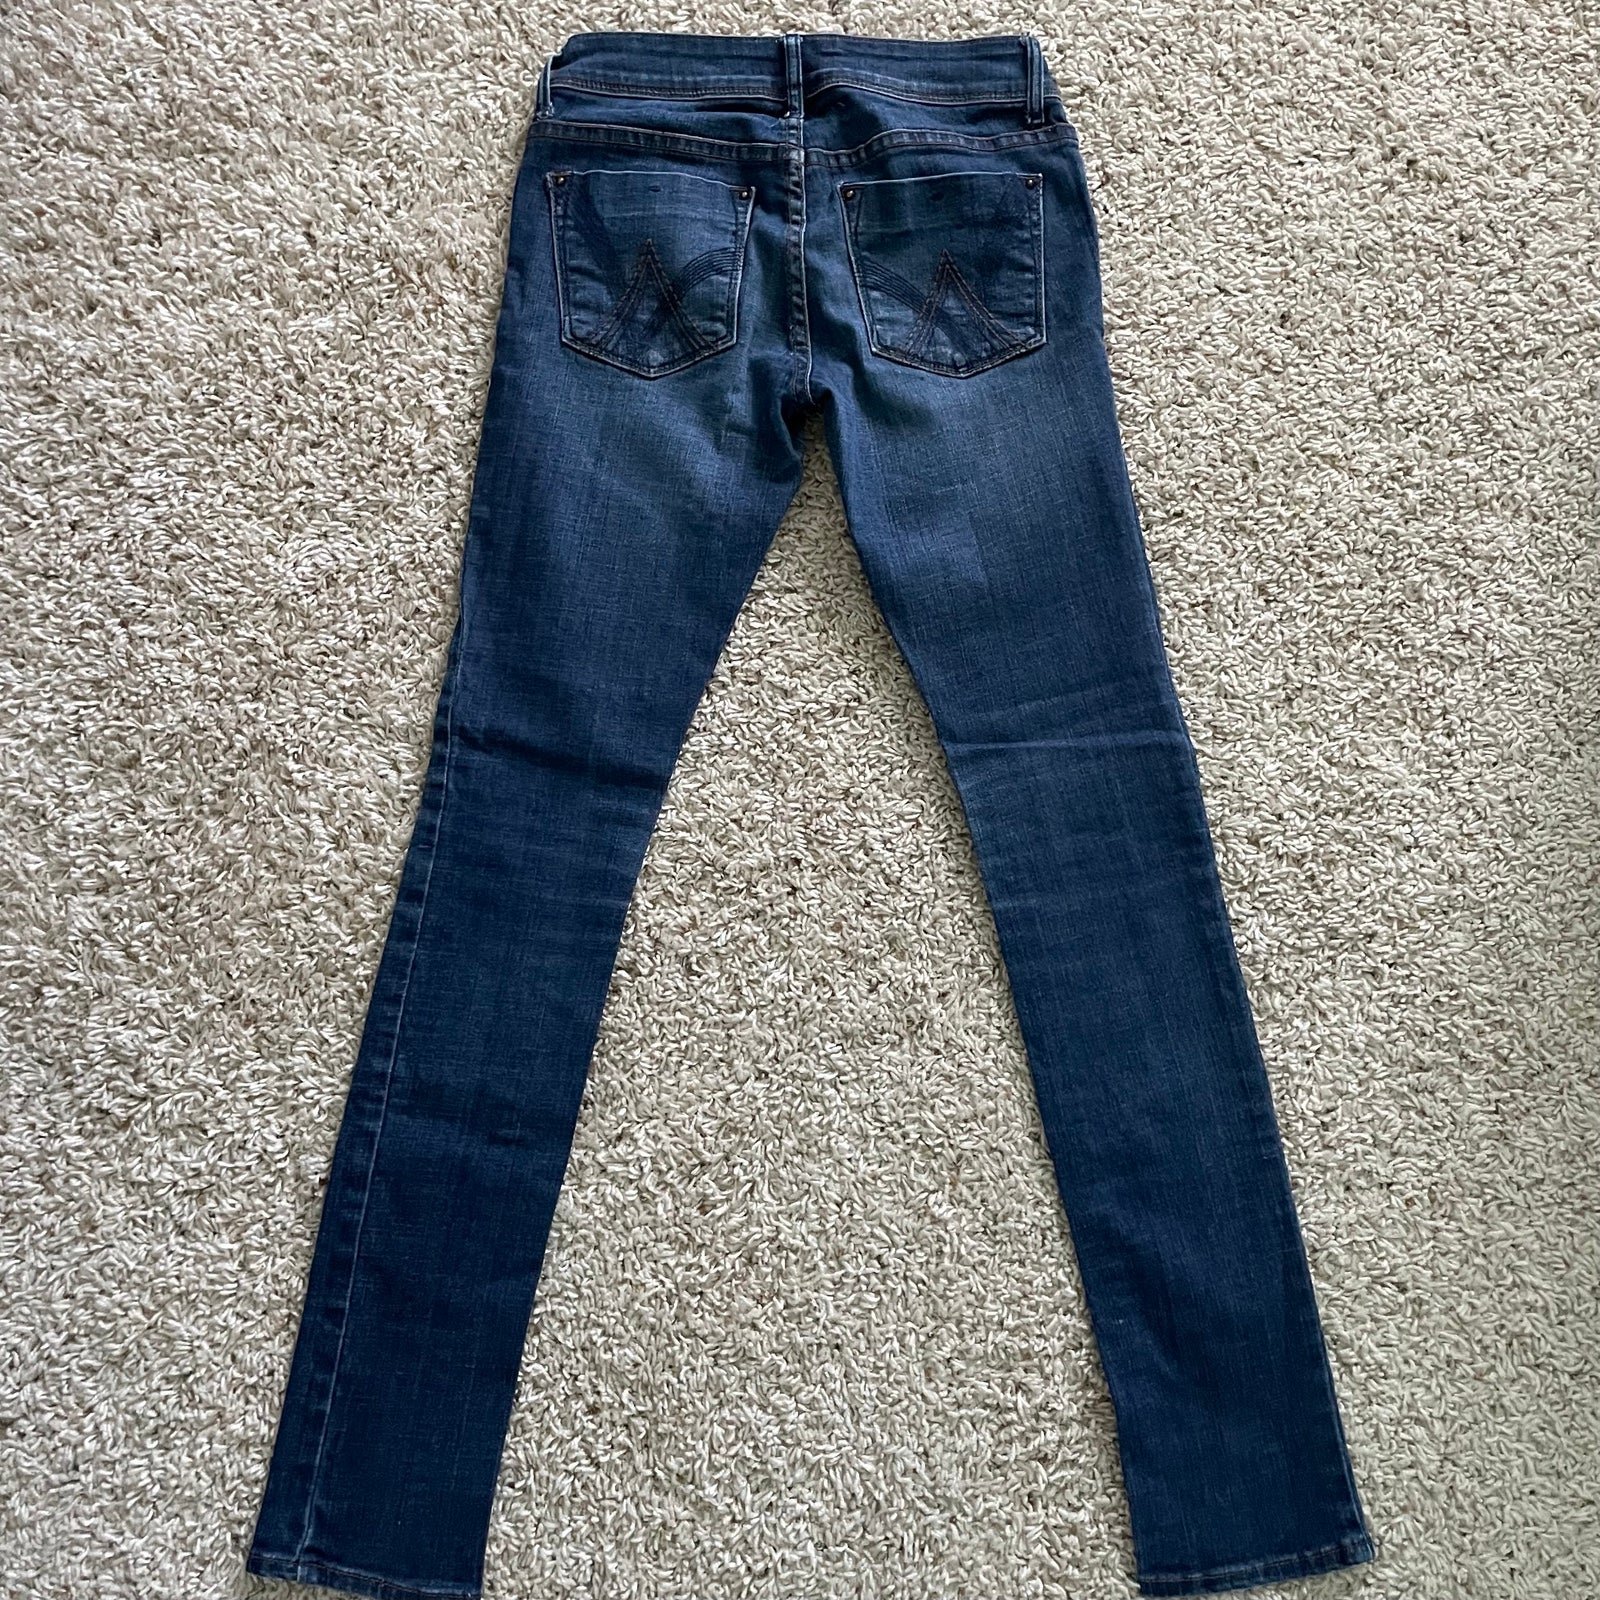 Comfortable delia’s juniors skinny jeans! jdVJrCrYx hot sale